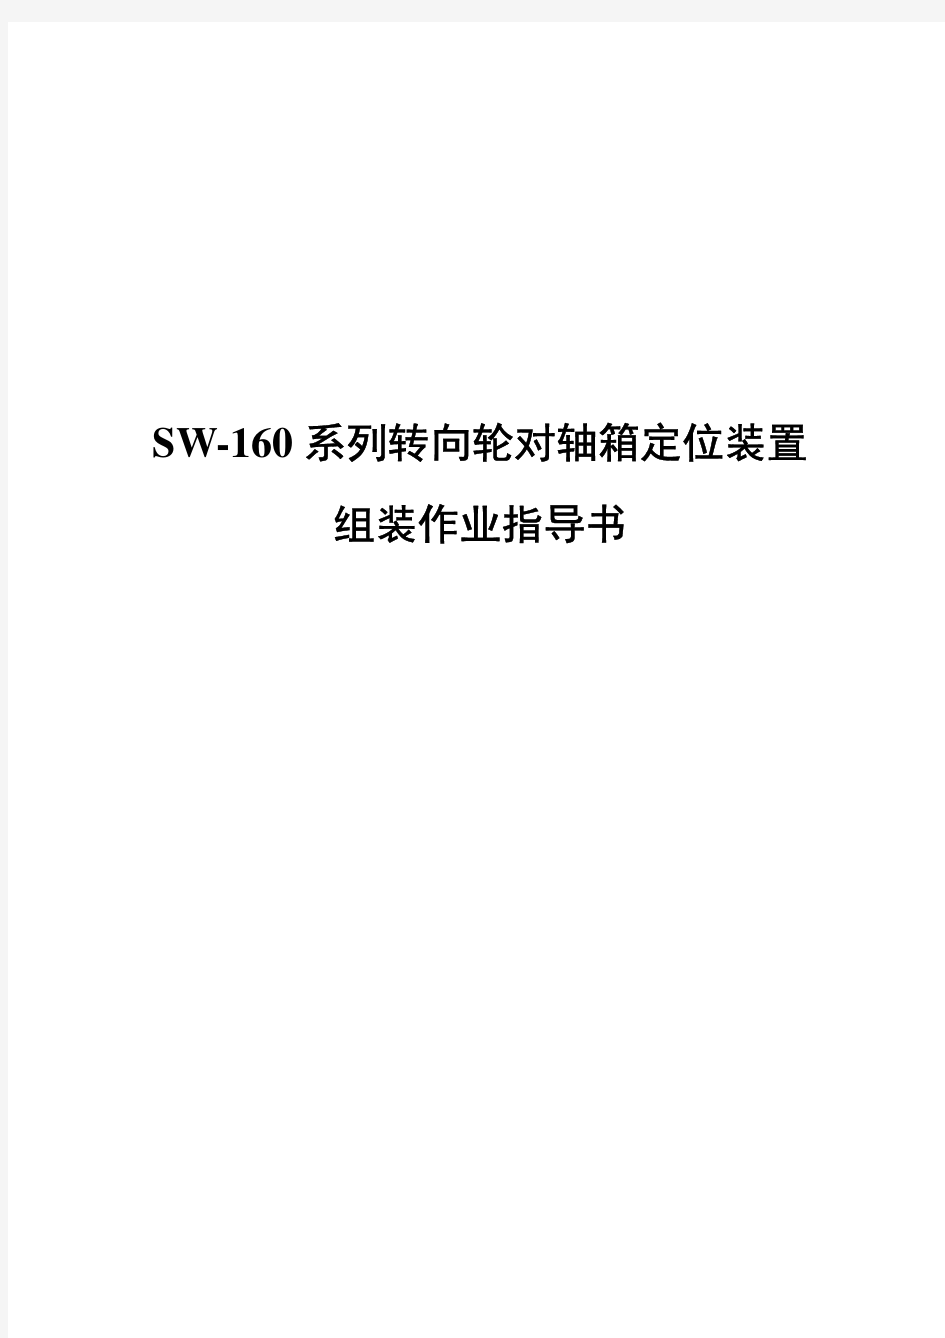 SW-160系列转向轮对轴箱定位装置组装作业指导书